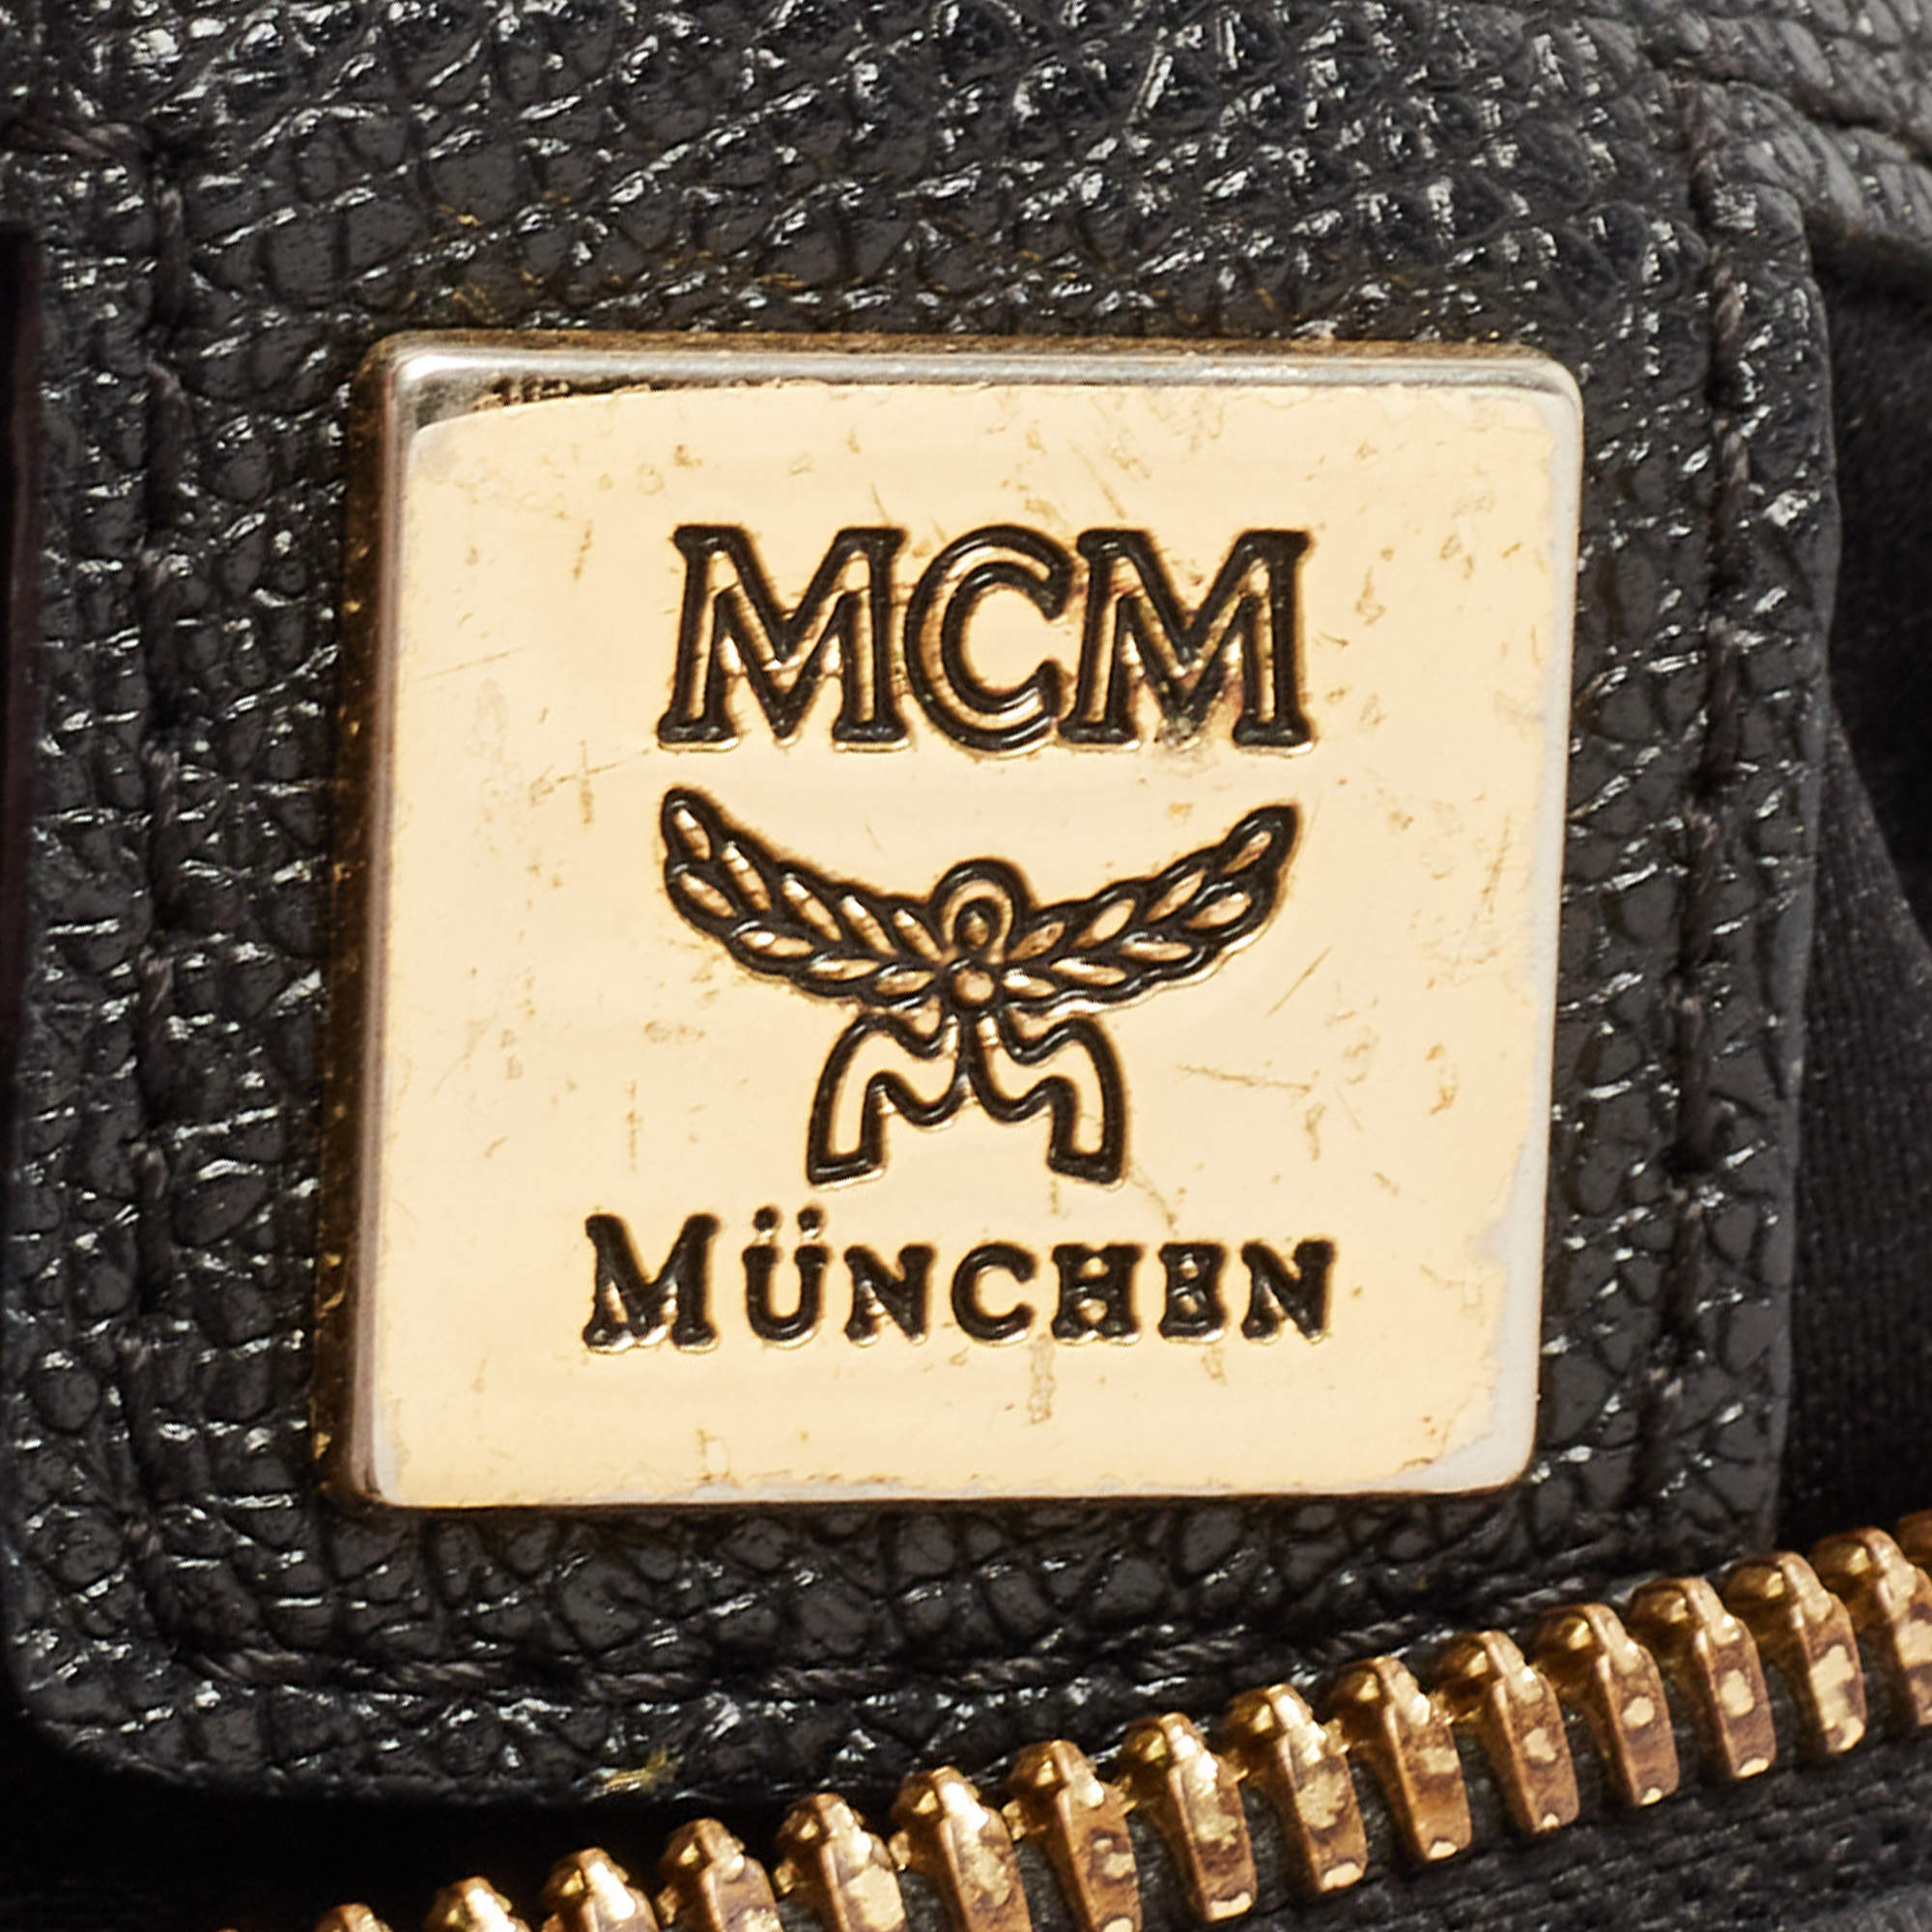 MCM Black Leather Embellished Boston Bag MCM